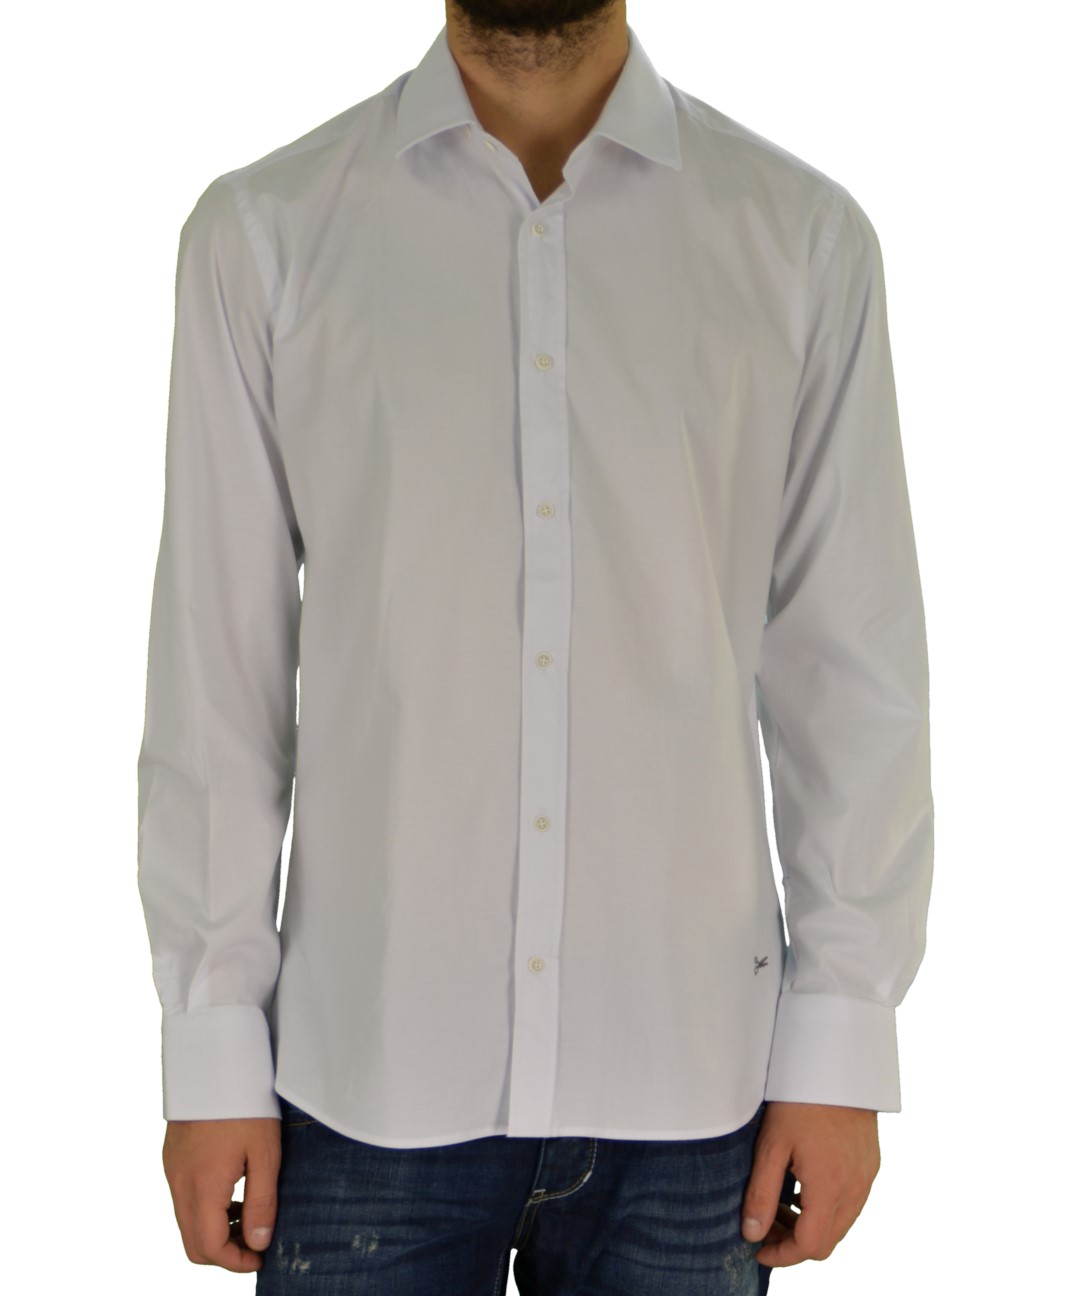 Ben Tailor λευκό πουκάμισο 185210